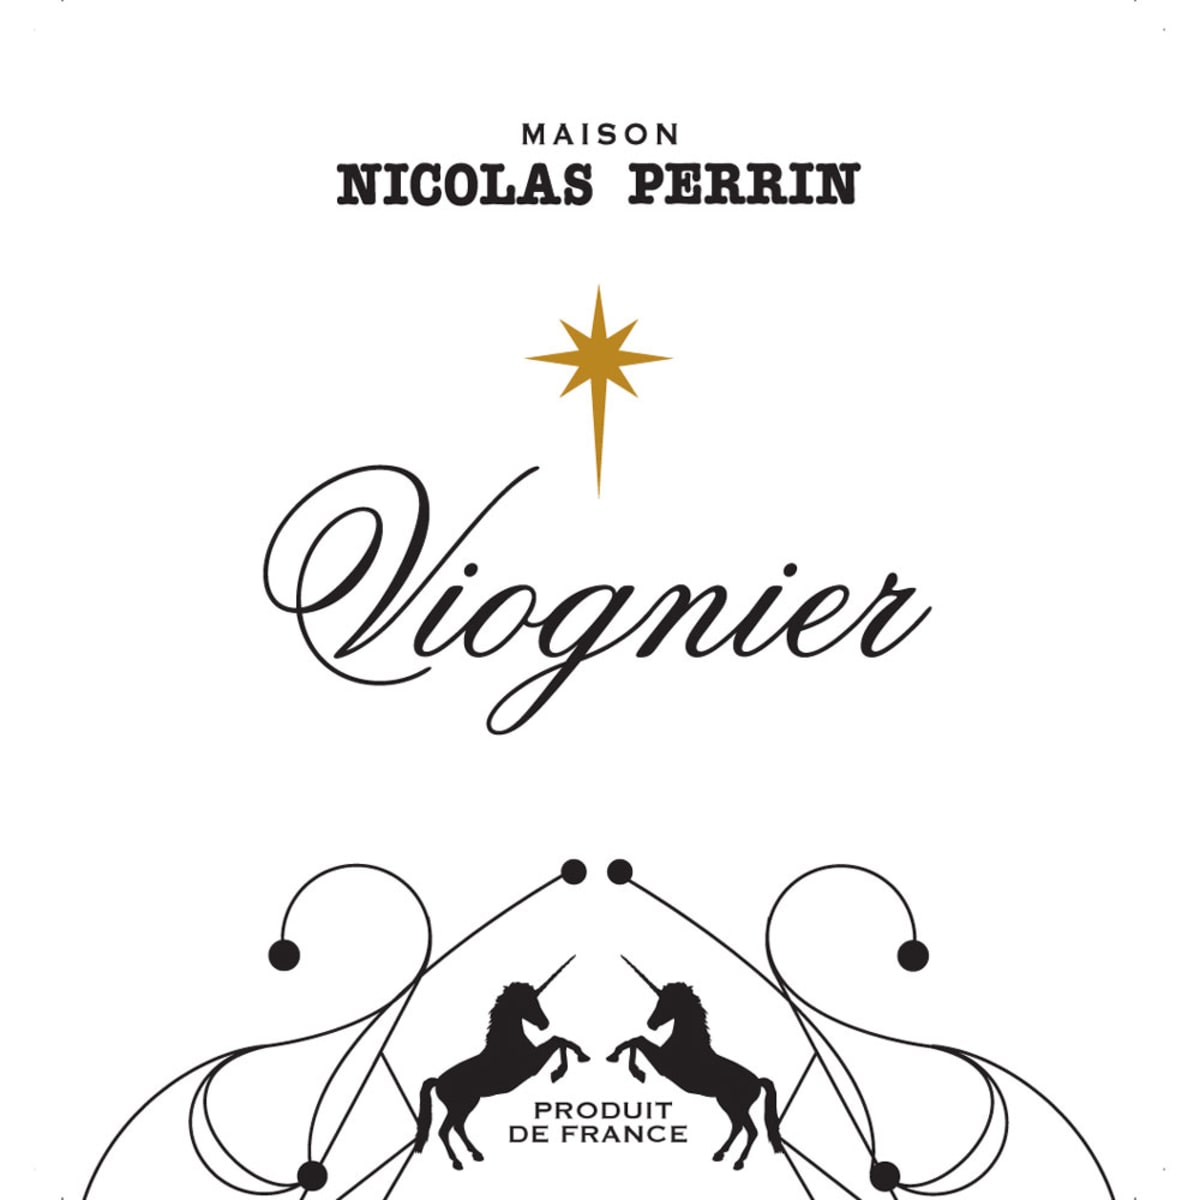 Maison Nicolas Perrin Viognier 2014 Front Label